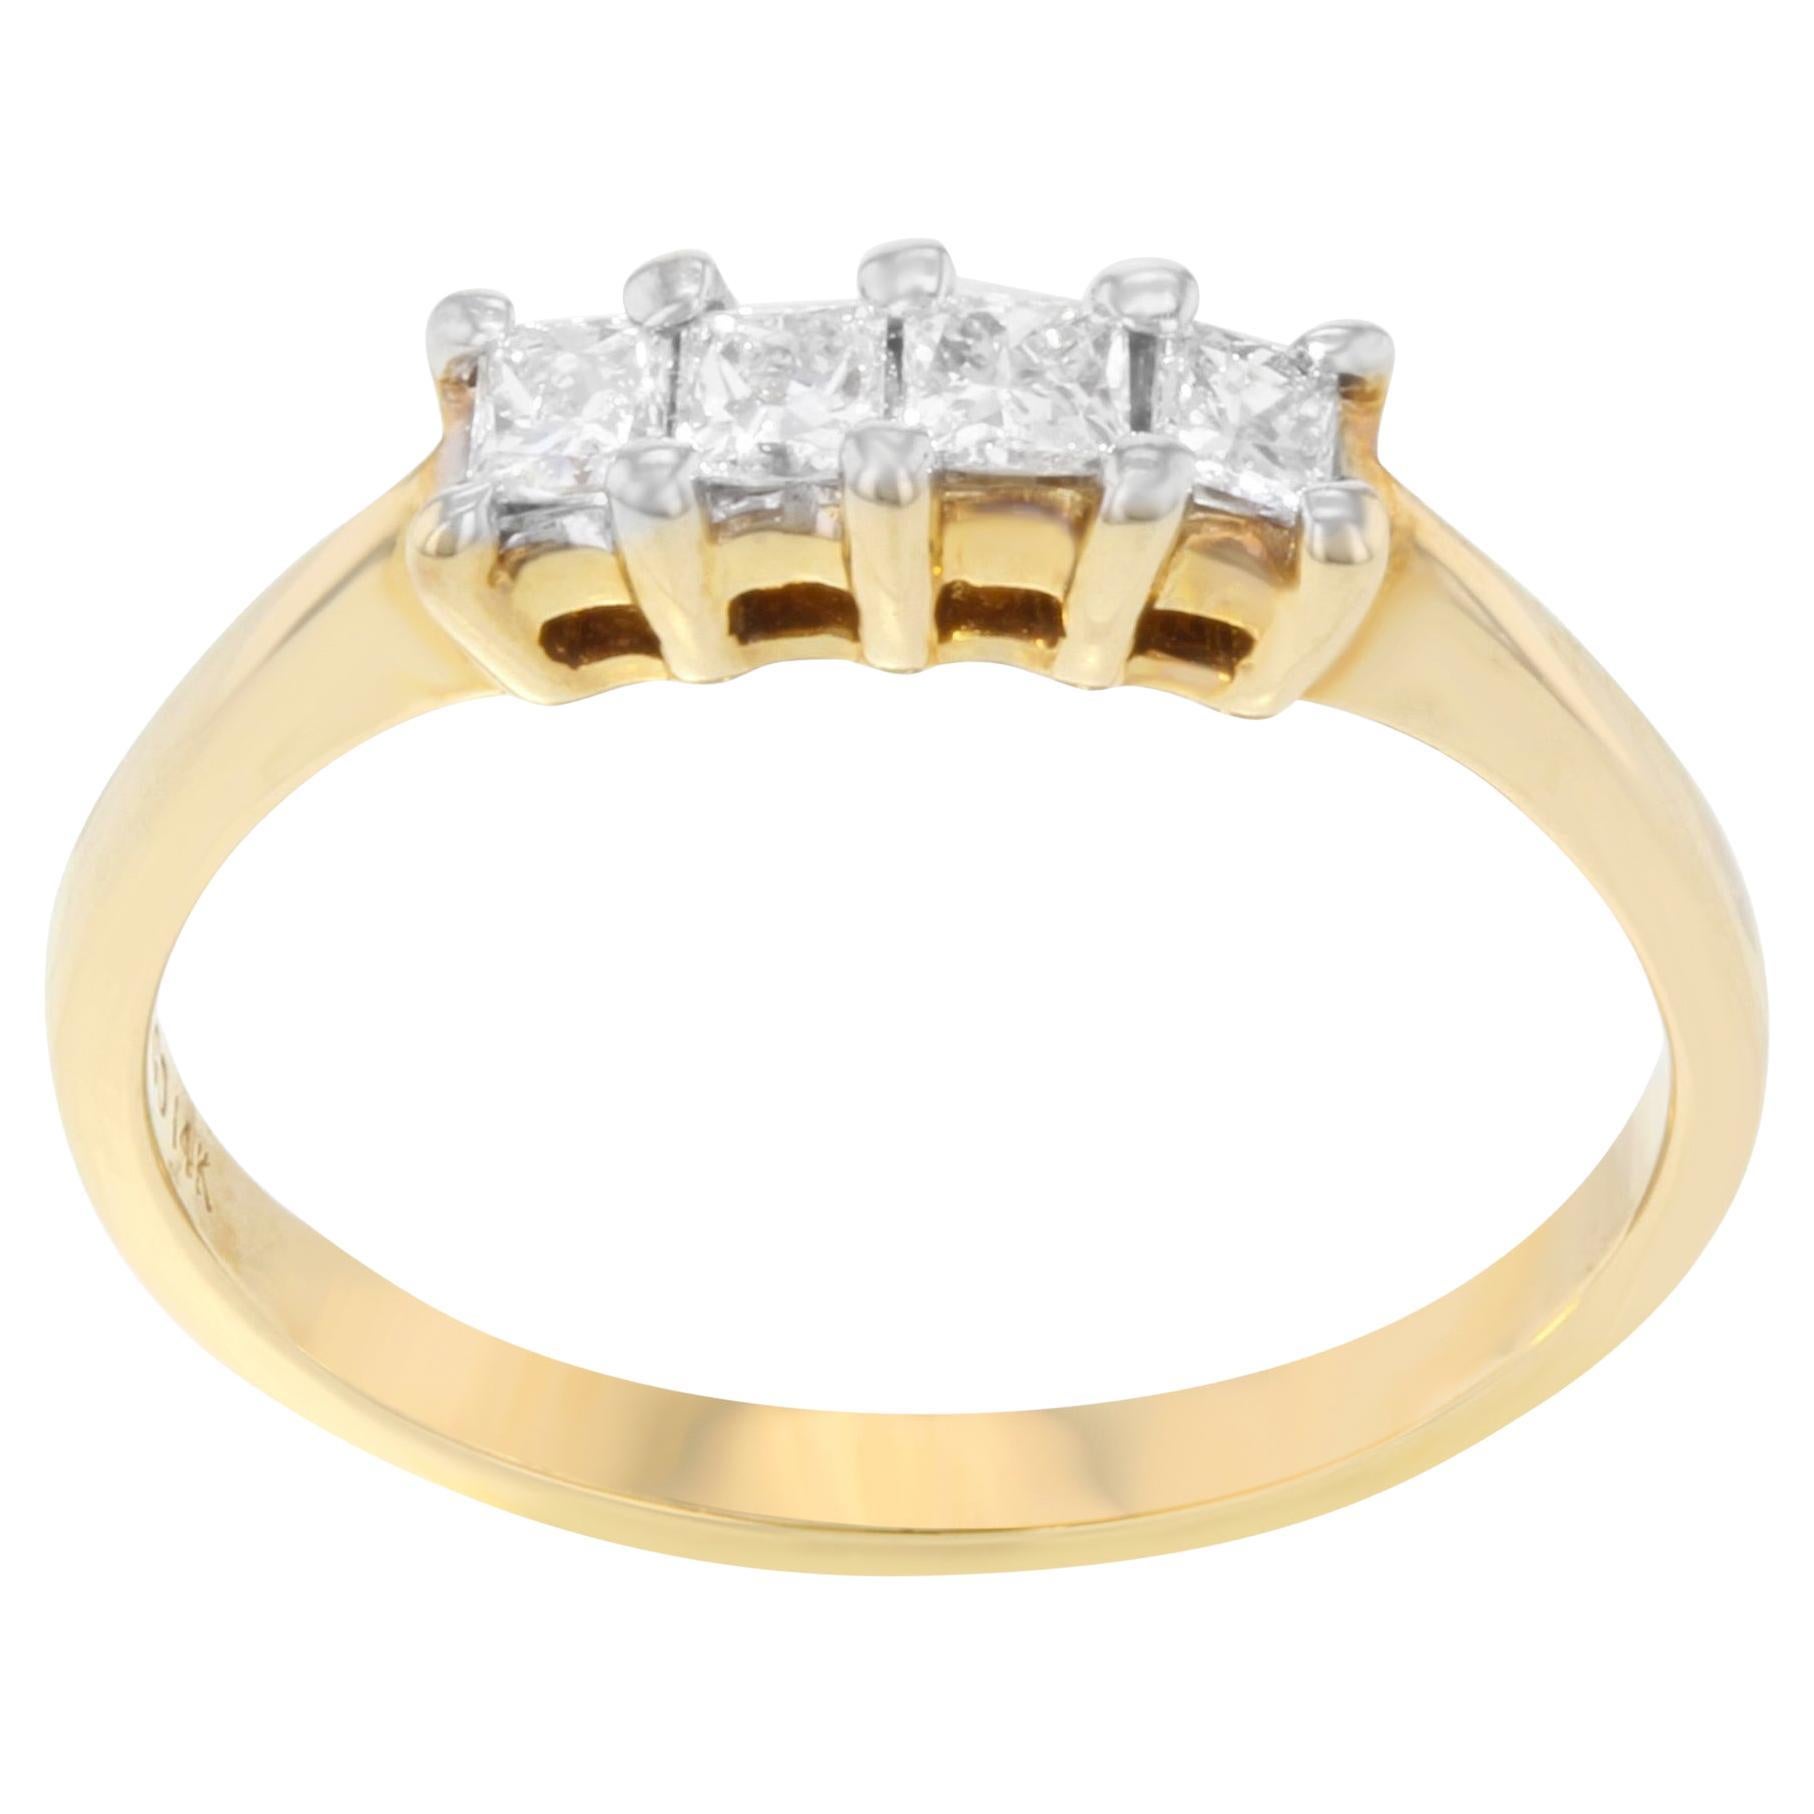 Four Princess Cut Diamond Wedding Band Ring 14K Yellow Gold 0.50cttw